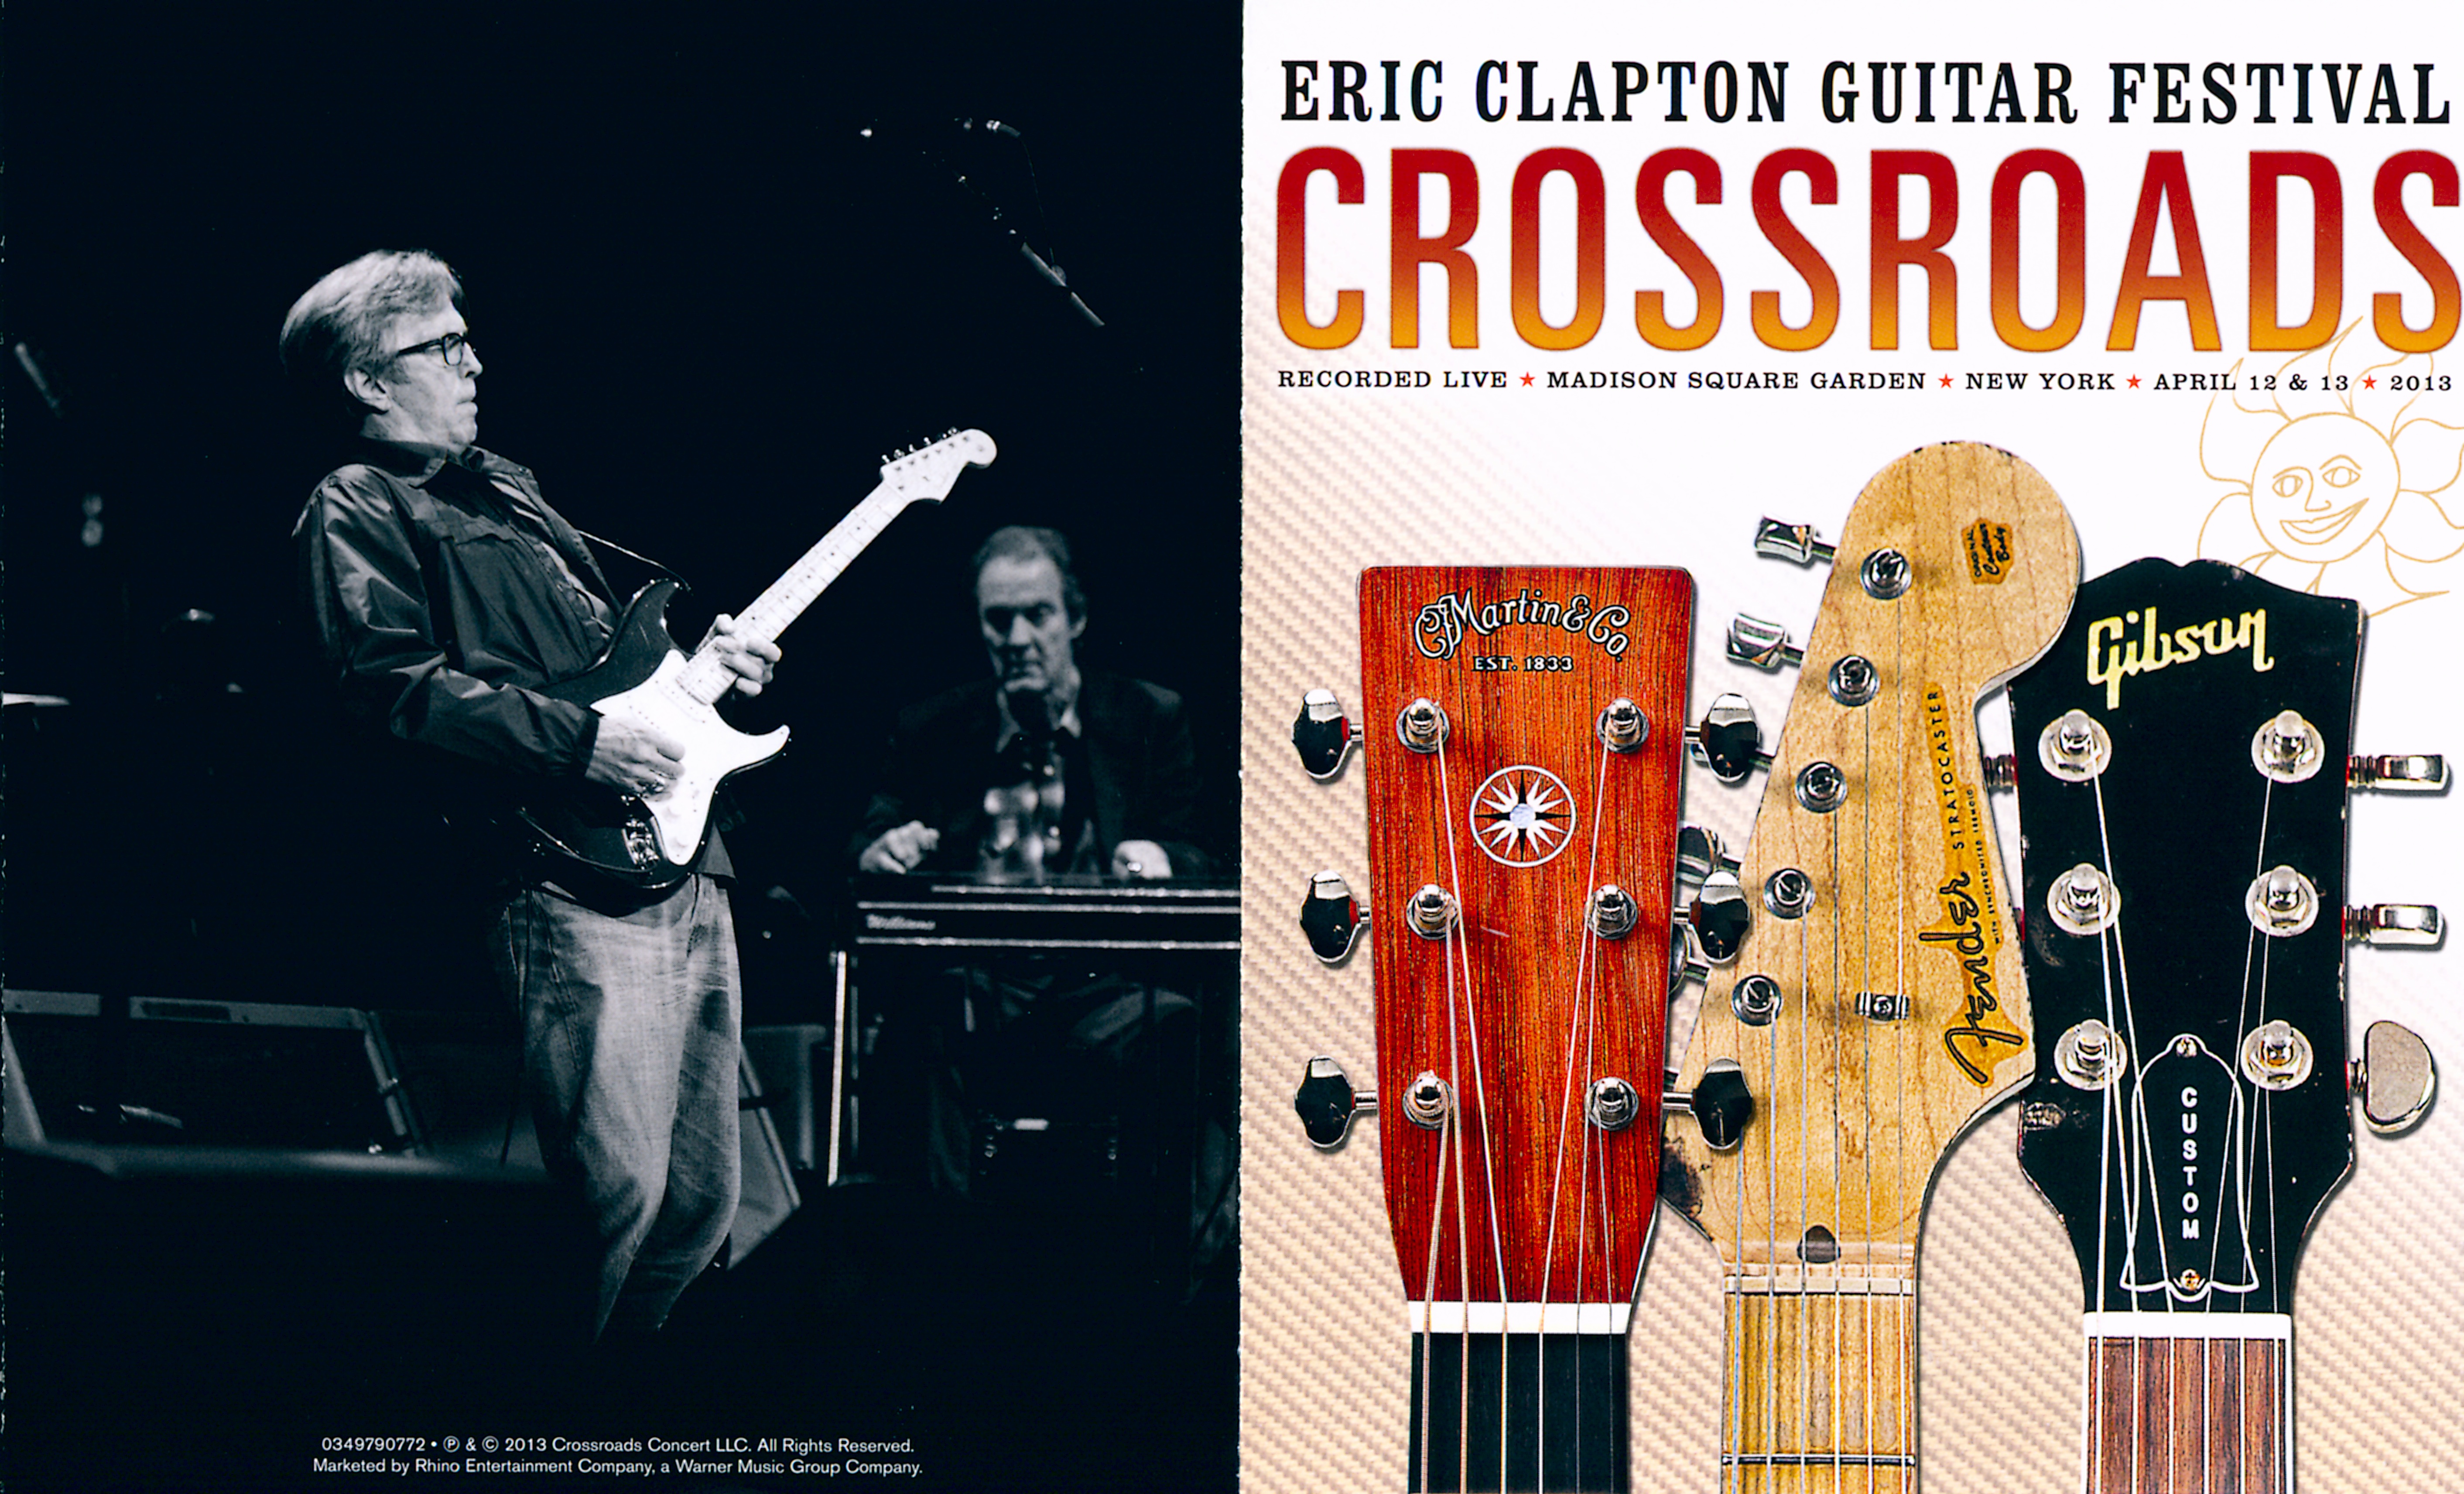 Jaquette DVD Eric Clapton Crossrads Festival 2013